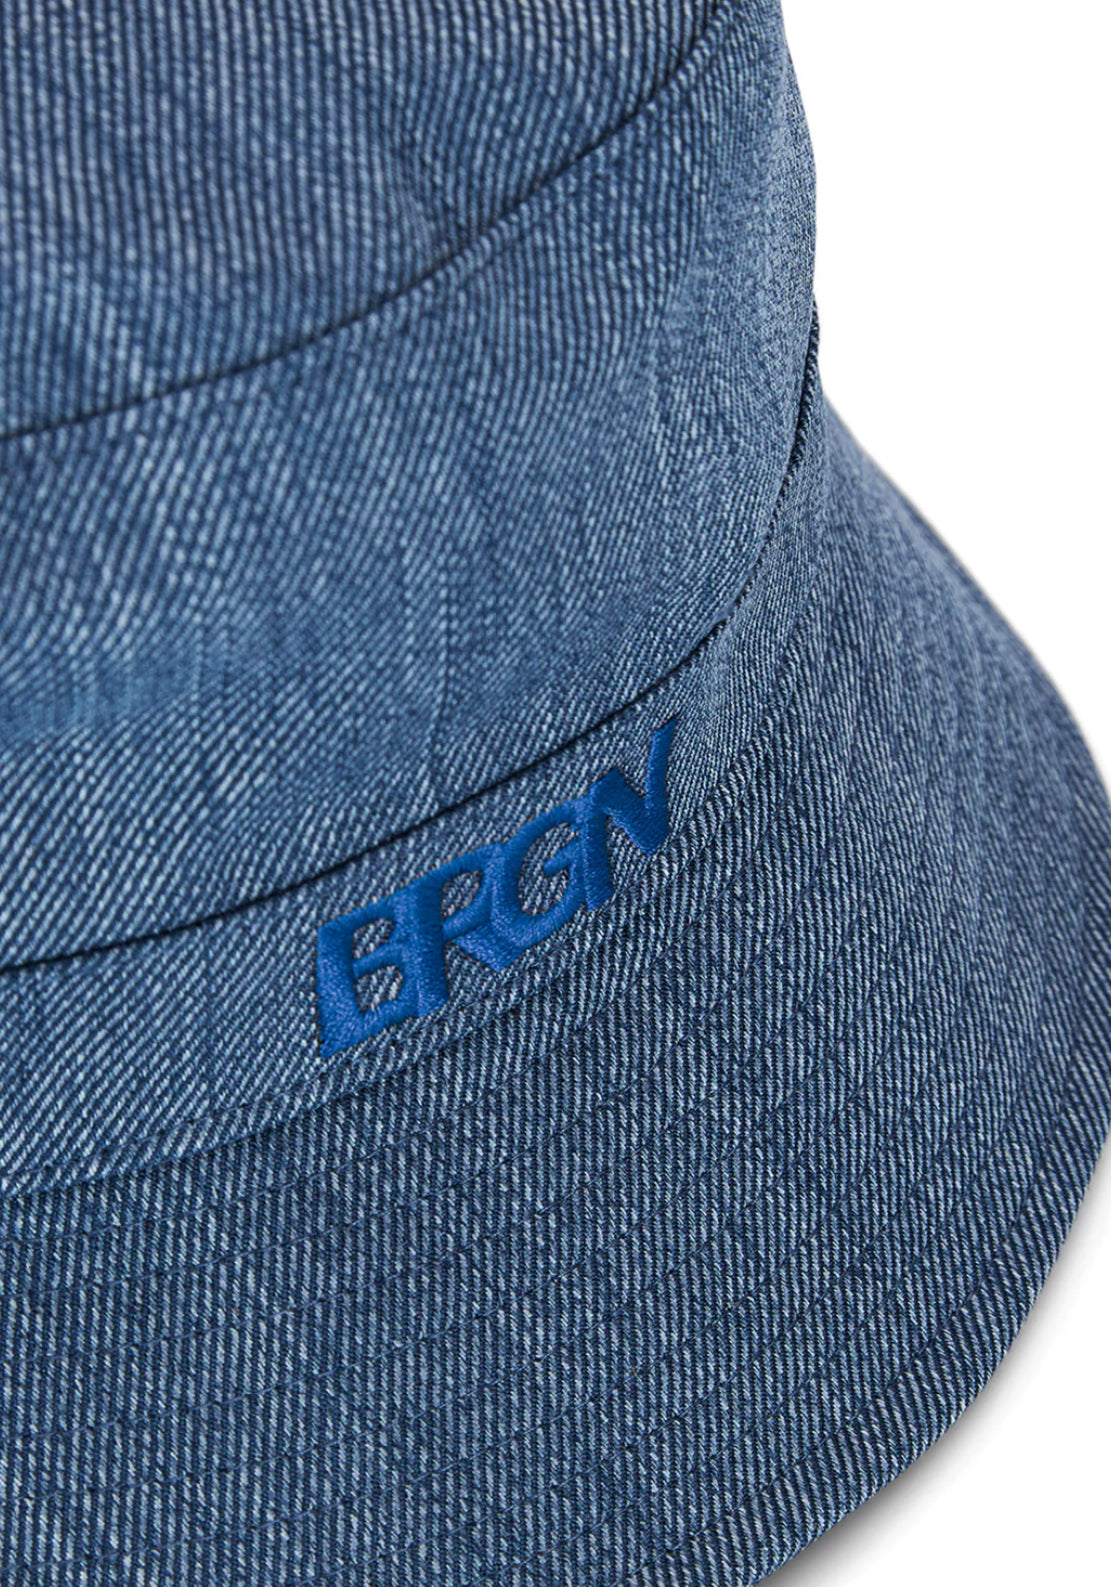 BRGN bucket hat